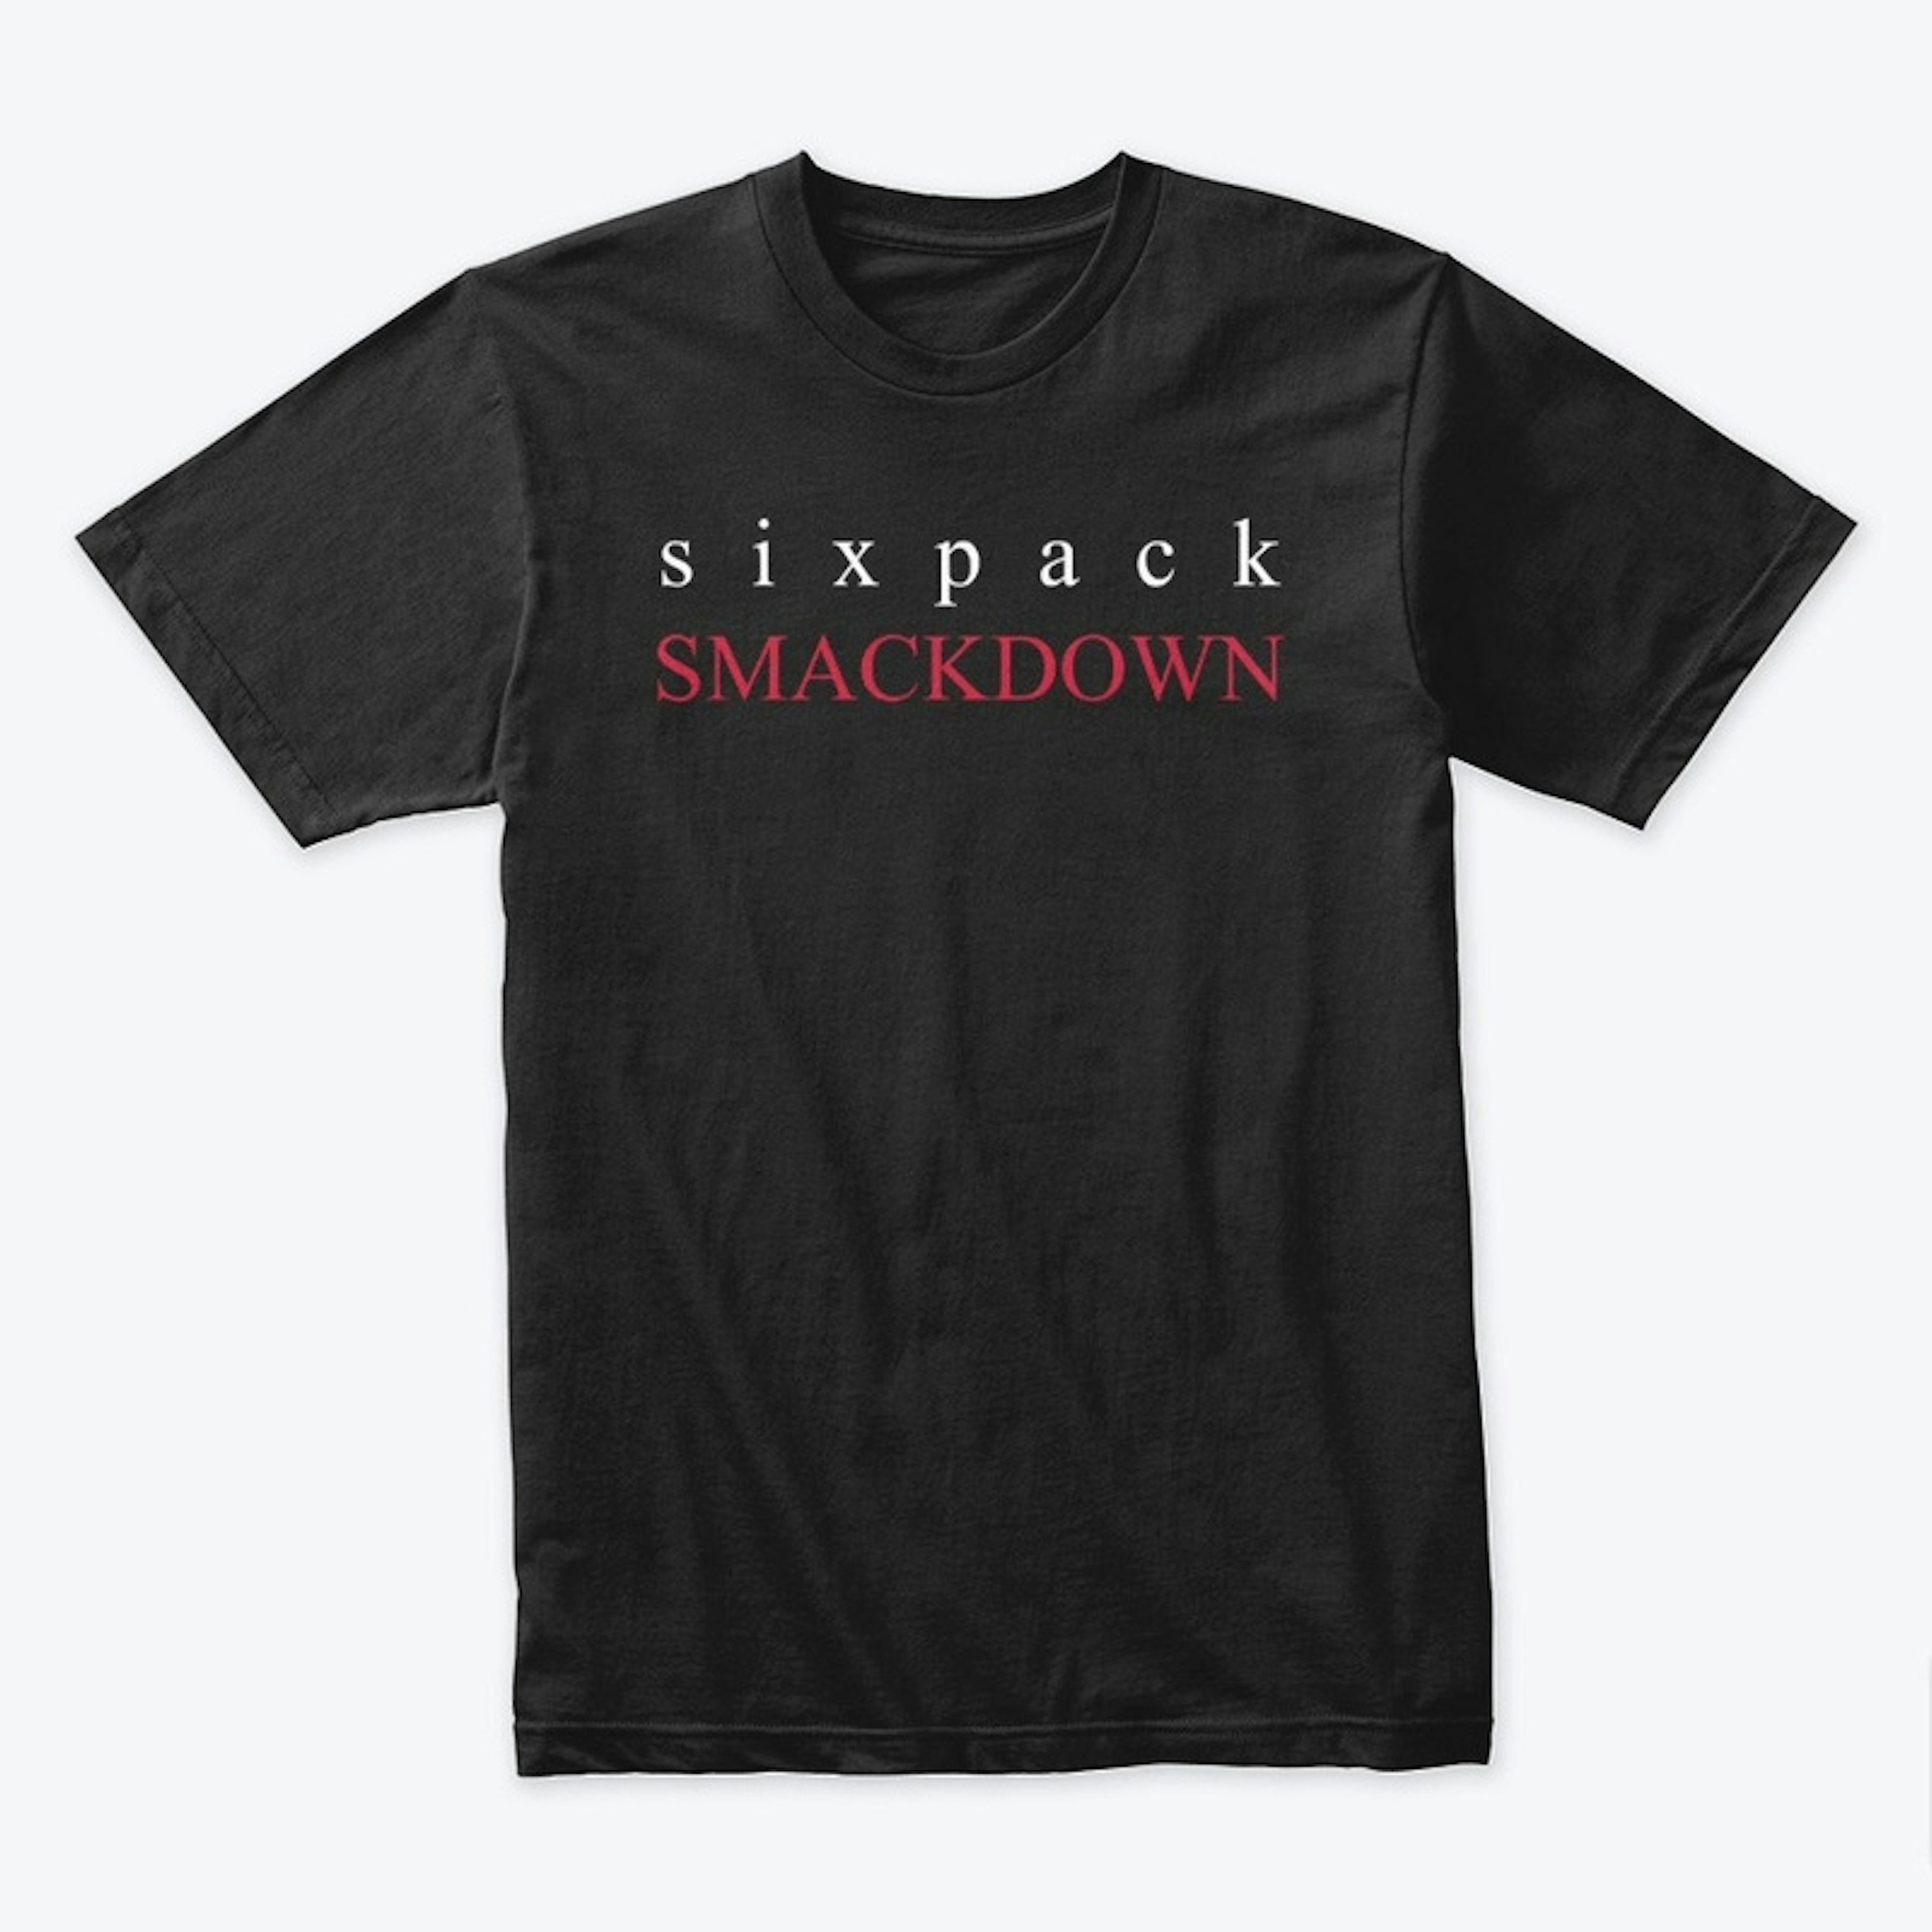 SixPackSmackdown Logo Wear